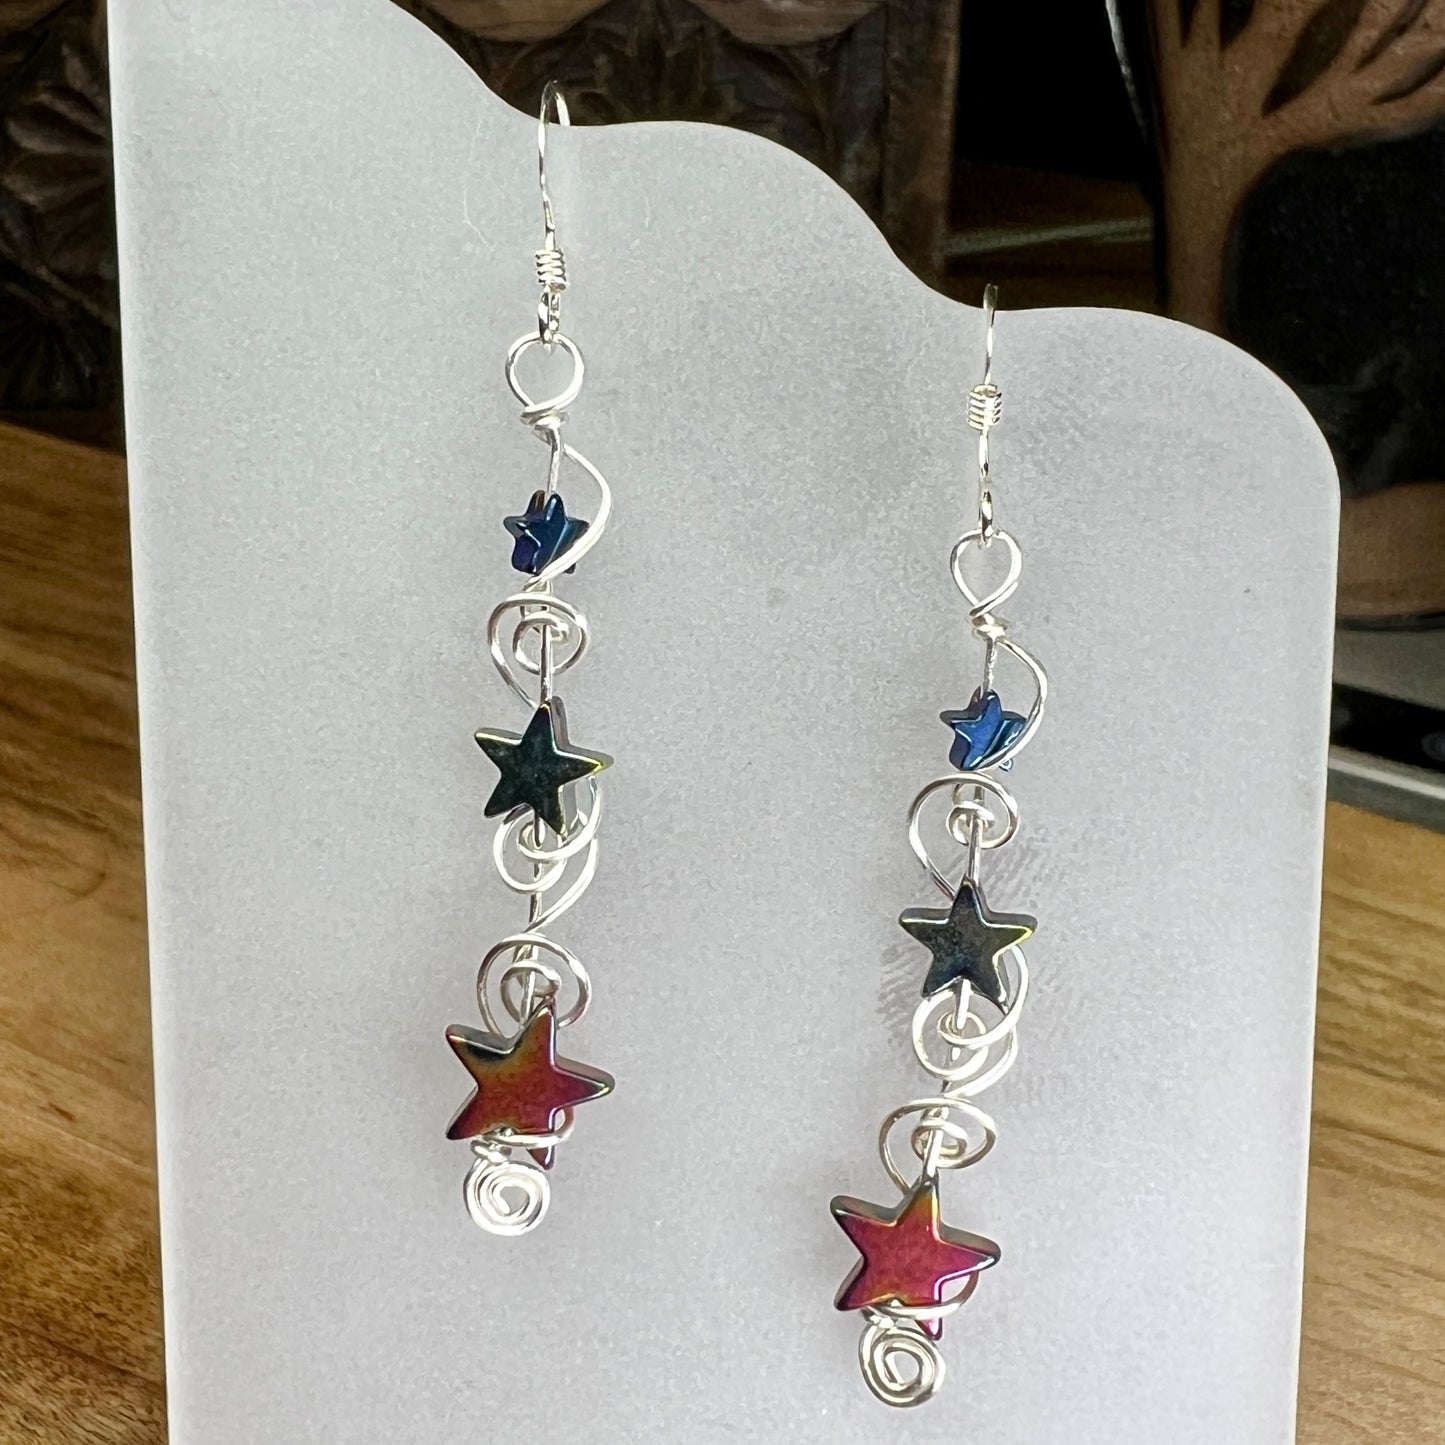 Hematite Star earrings - choose your own adventure